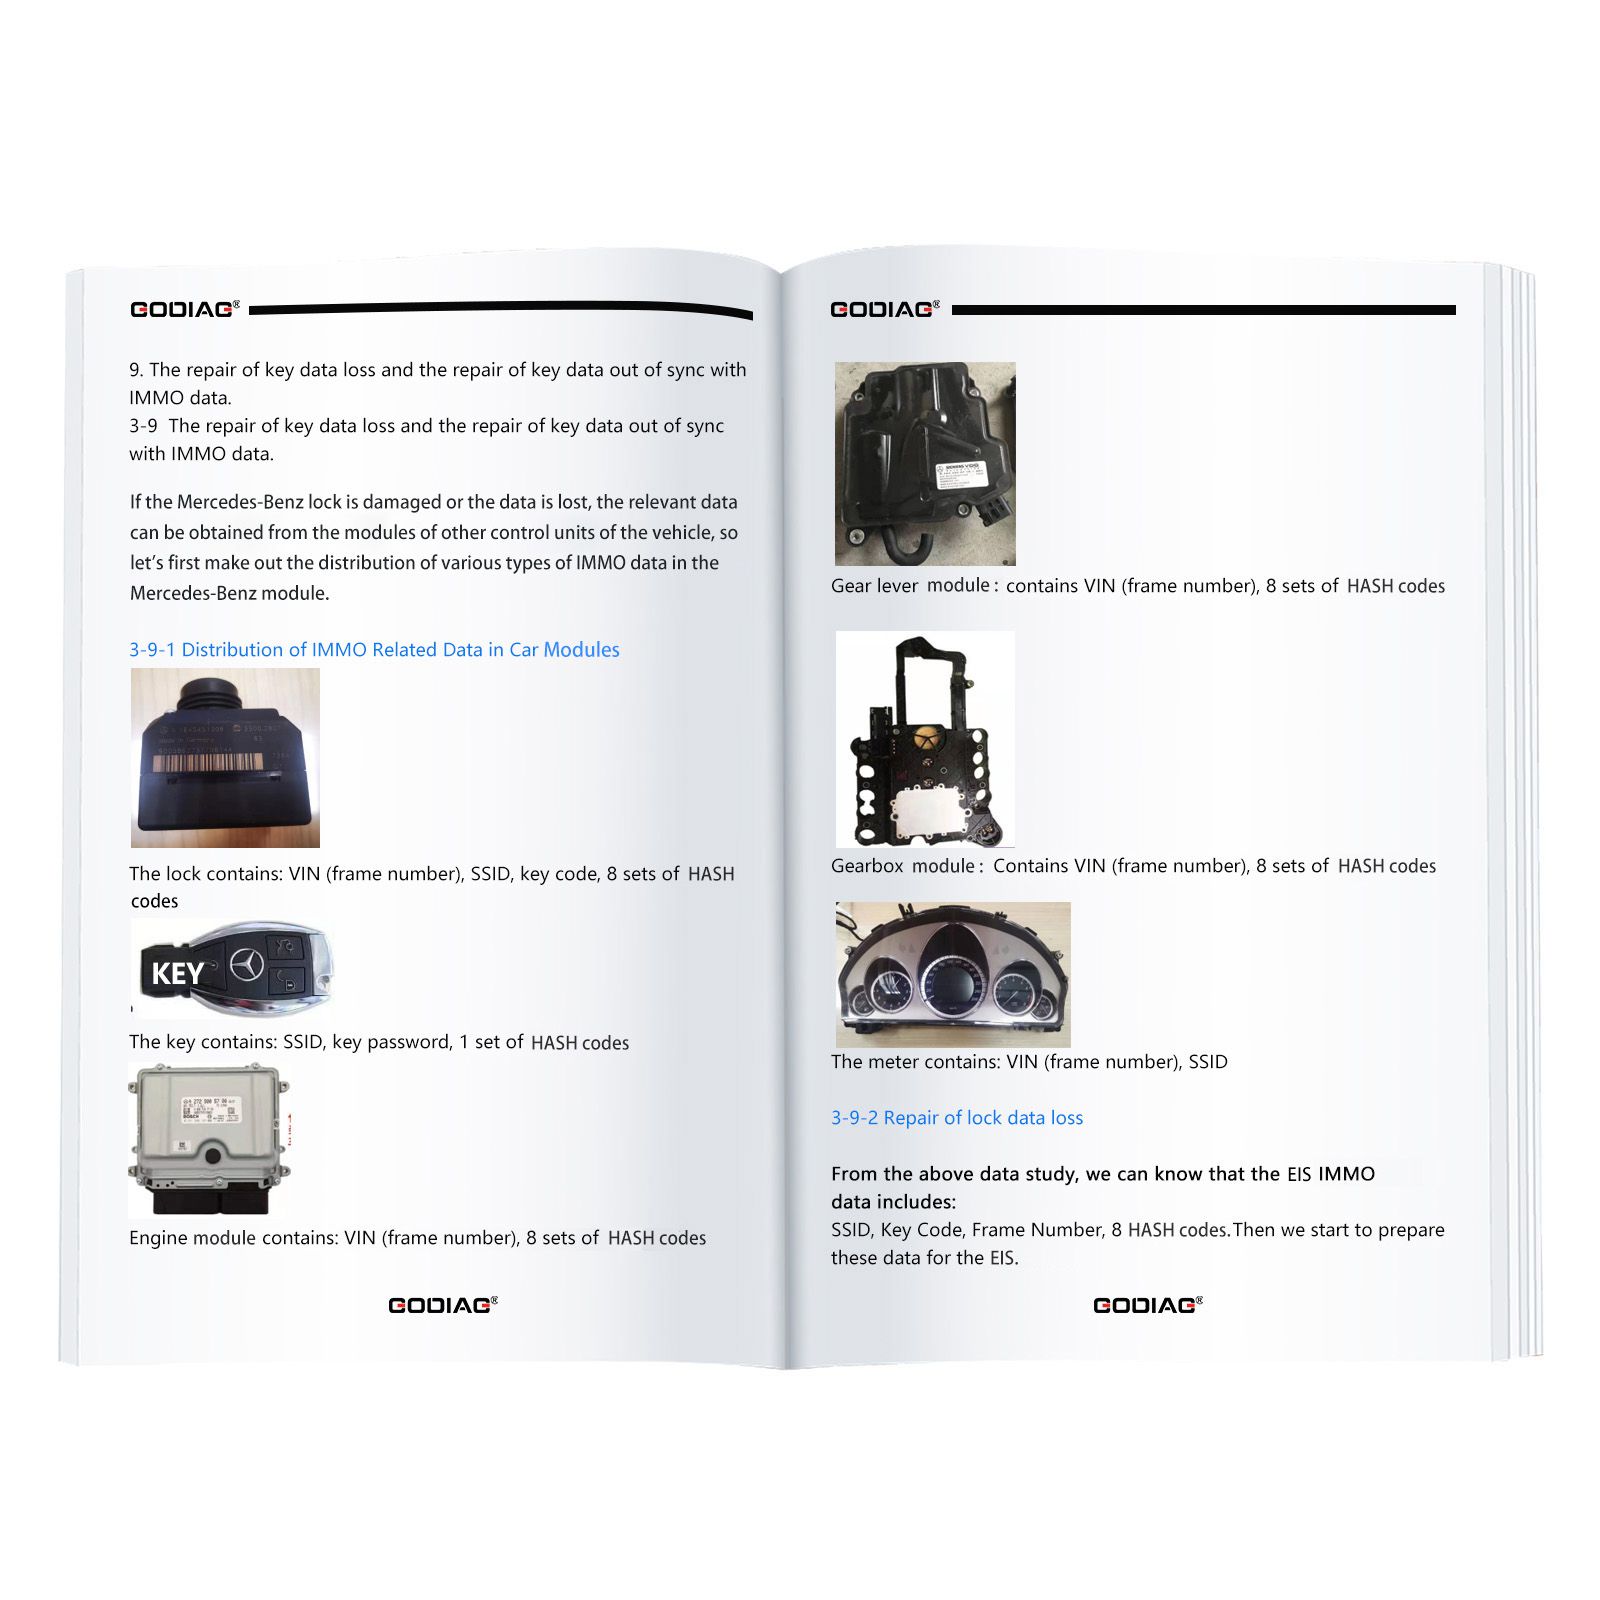 2023 GODIAG Key Tool Plus Practical Instruction 1&2 Two Books for Locksmith or Vehicle Maintenance Engineer